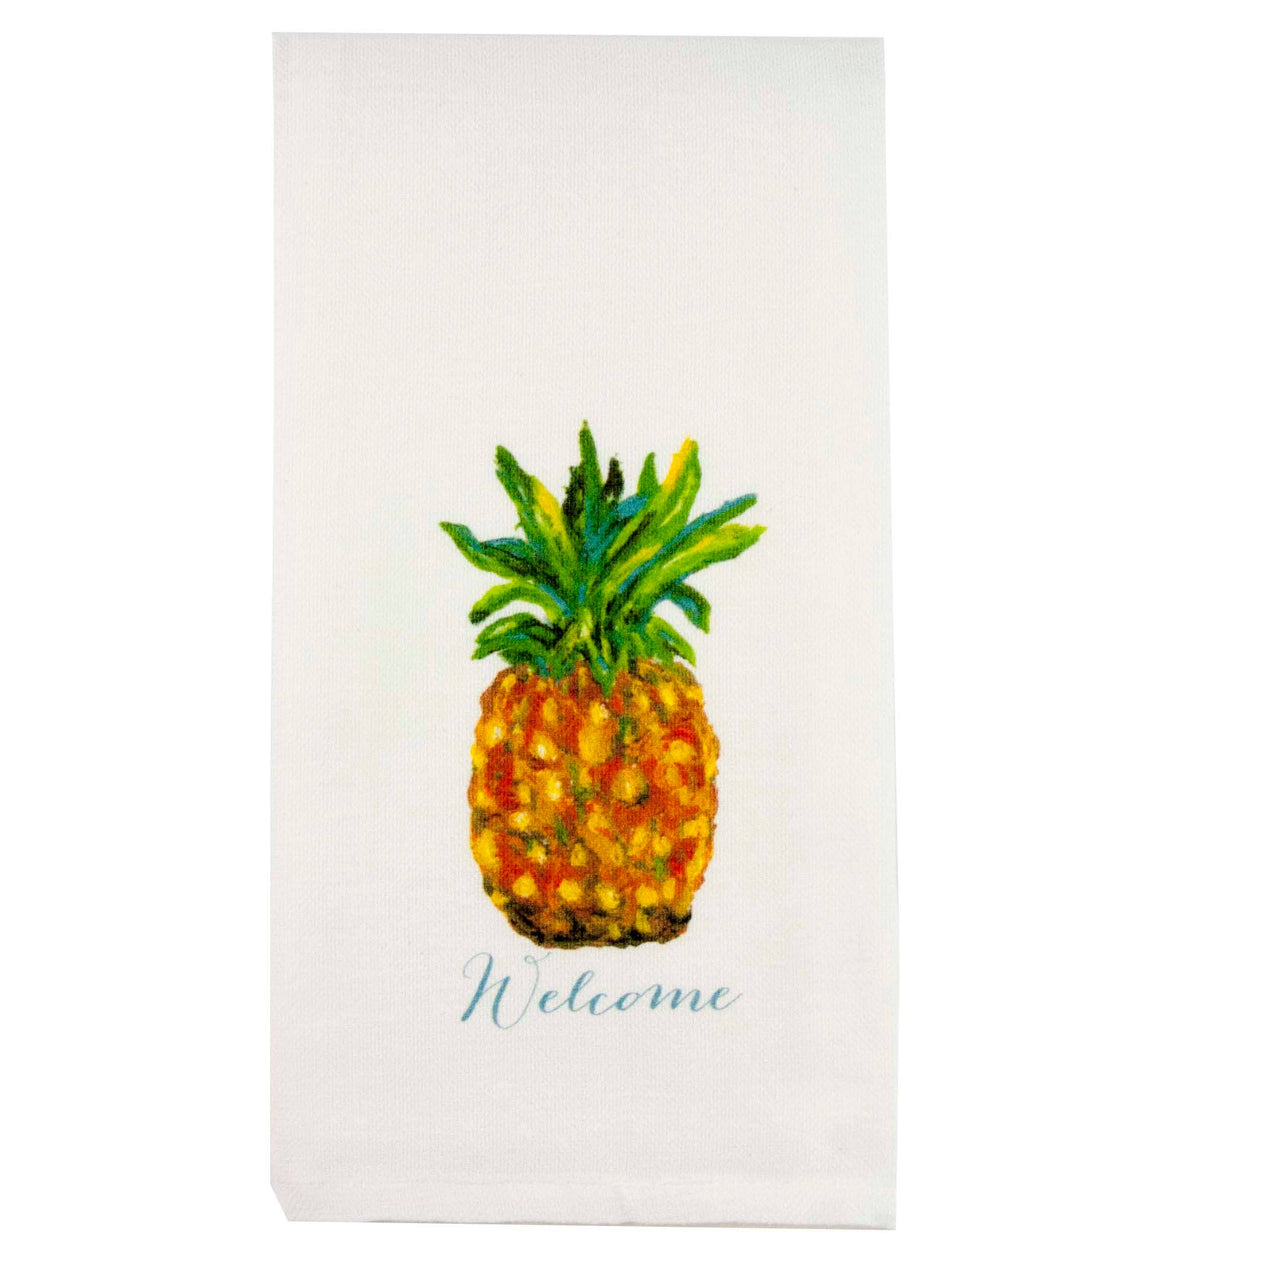 French Graffiti Pineapple Welcome Dishtowel